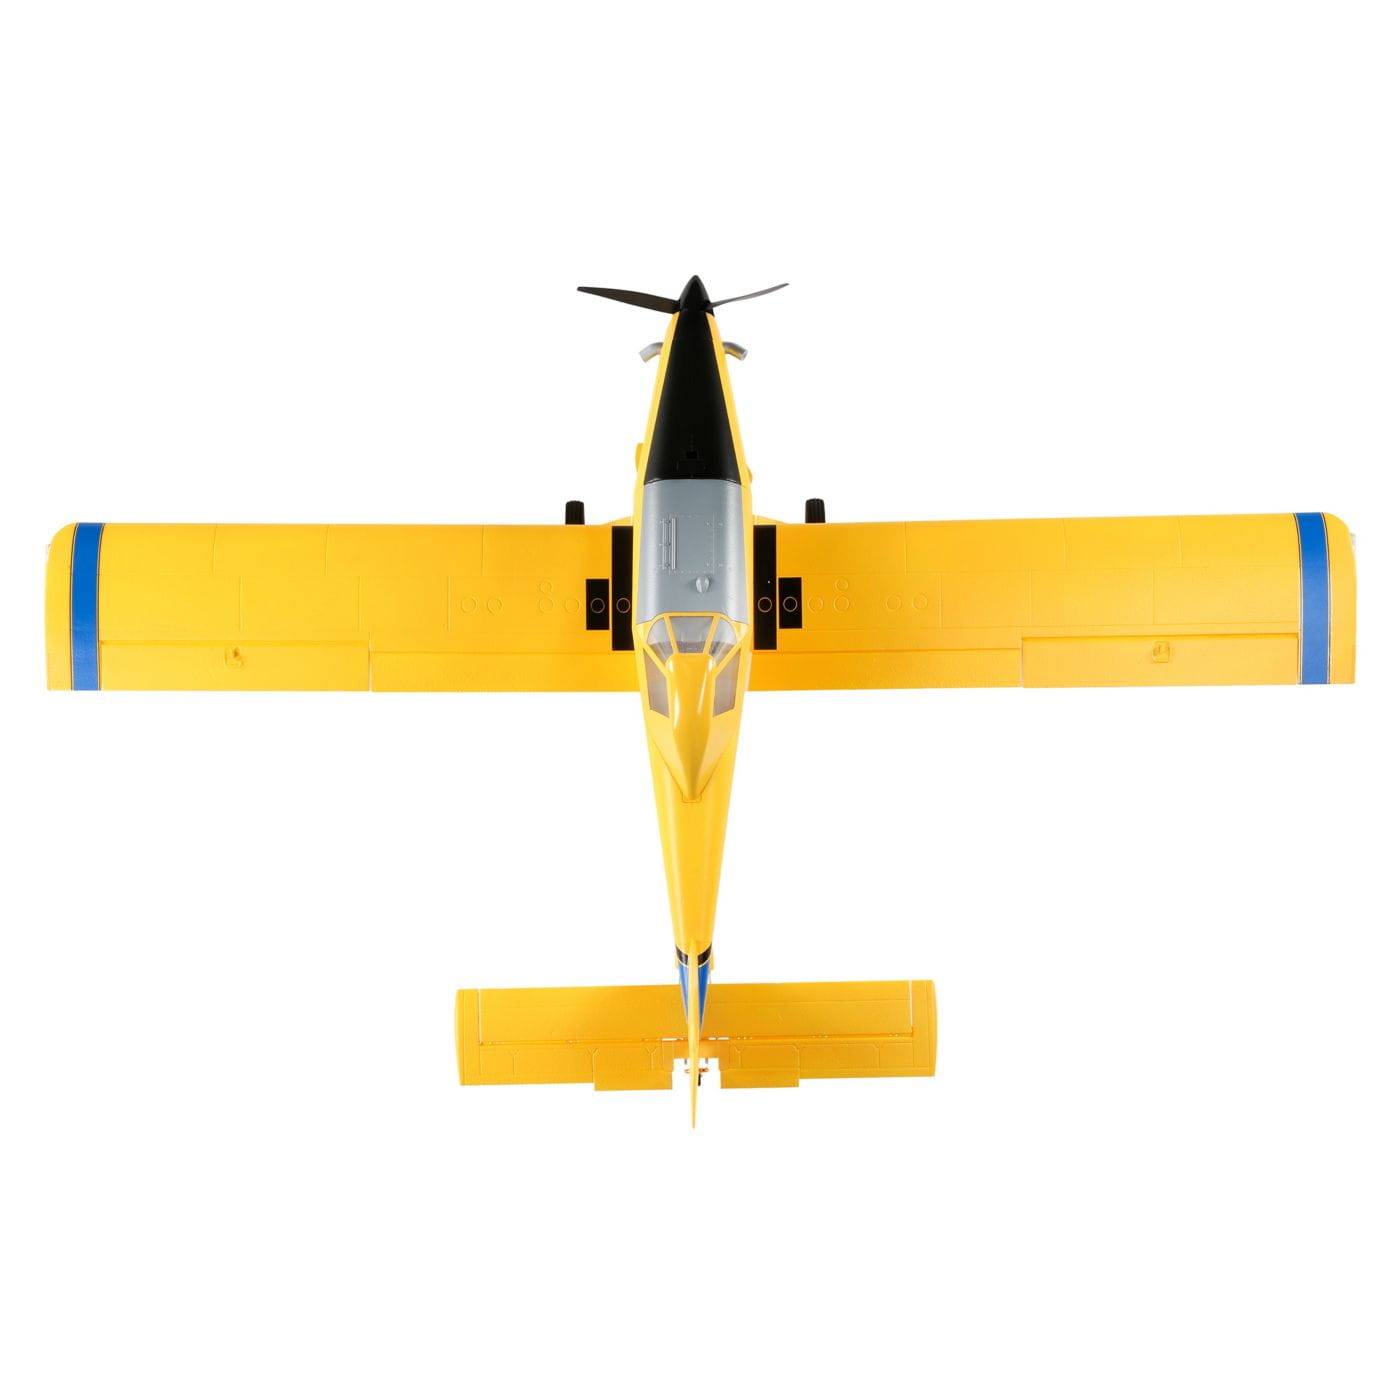 E-flite RC Flugzeug Air Tractor 1,5M Spektrum BNF, AS3X, SAFE Technik